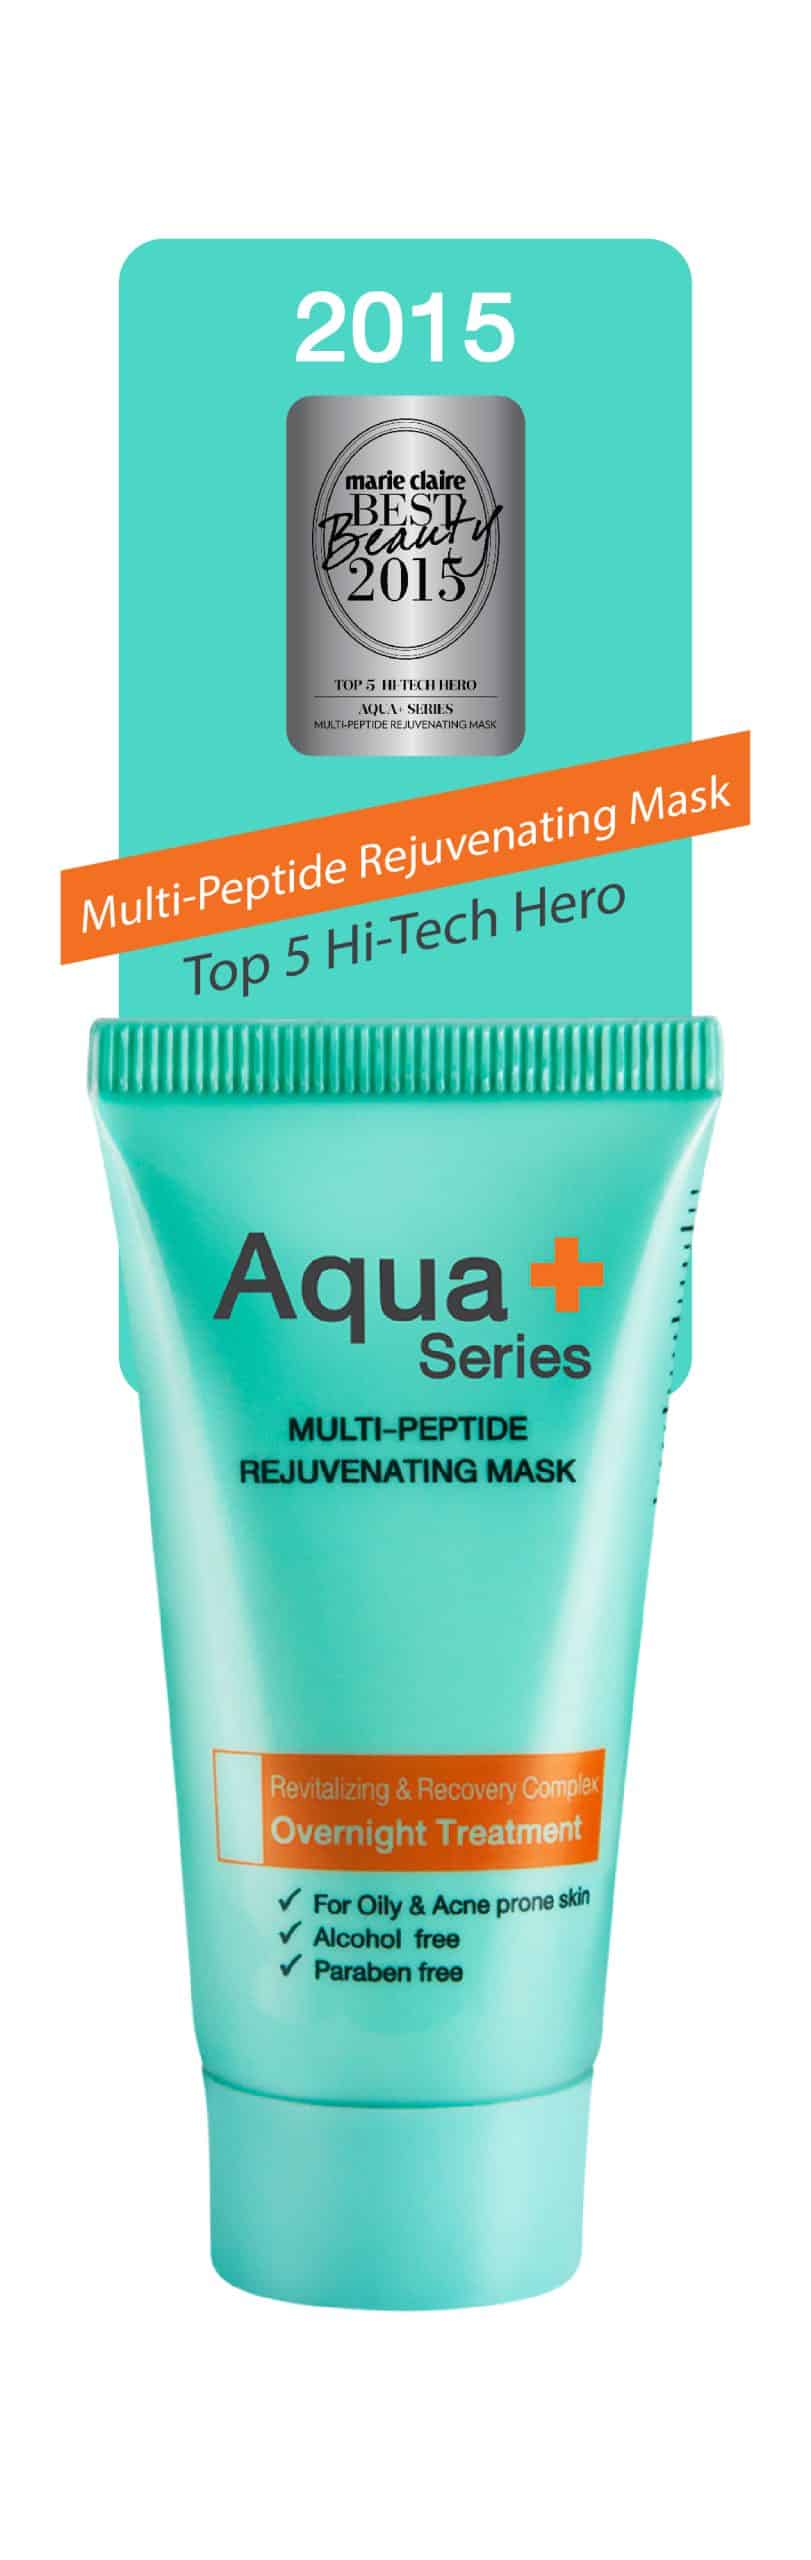 Multi-Peptide Rejuvenating Mask